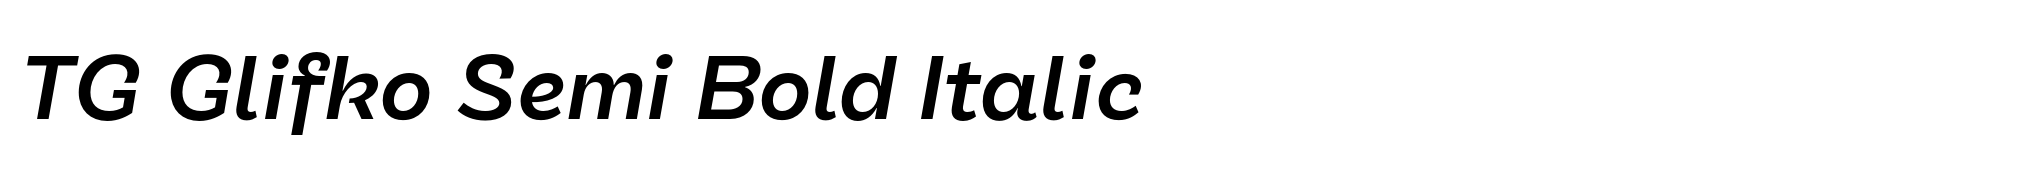 TG Glifko Semi Bold Italic image